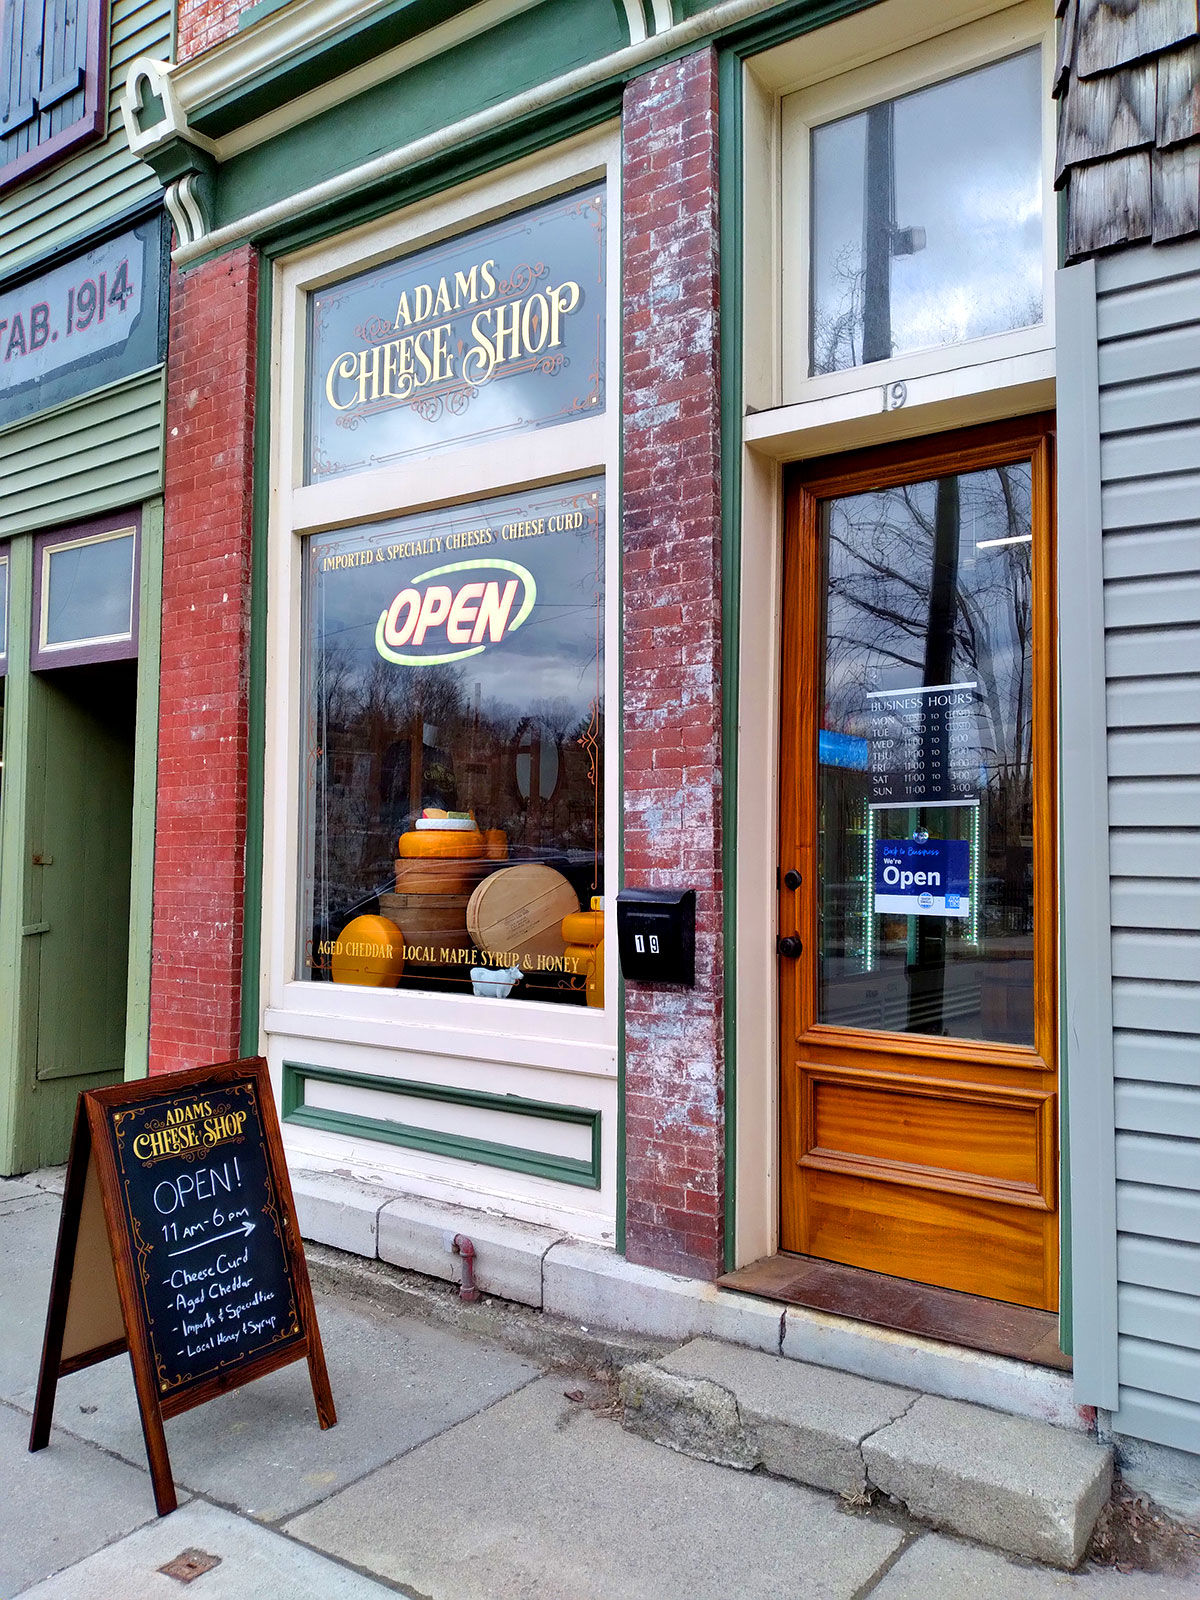 Exterior of the Adams Cheese Shop at 19 Main Street in Adams, NY.